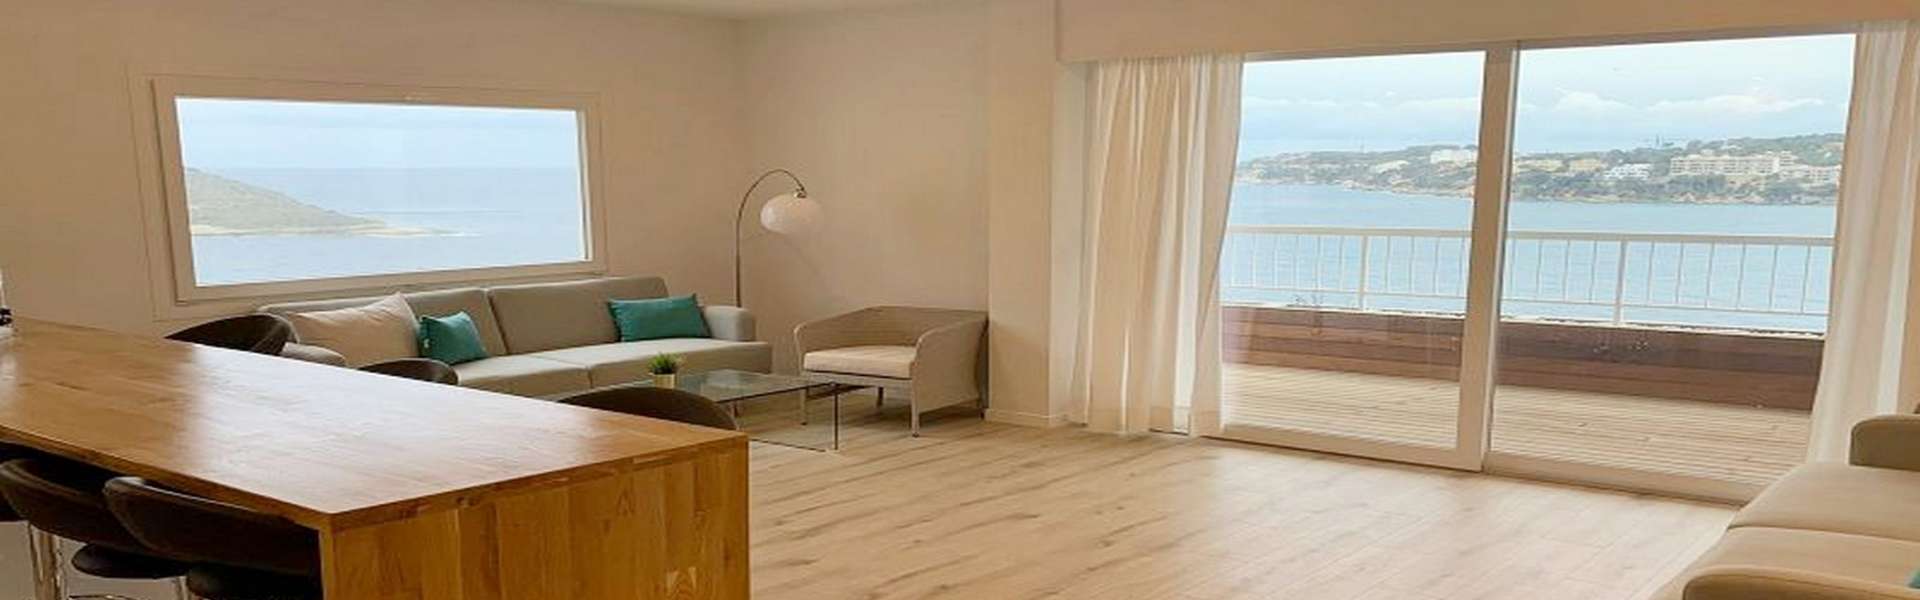 Calvia/Torrenova - Renoviertes Apartment direkt am Meer